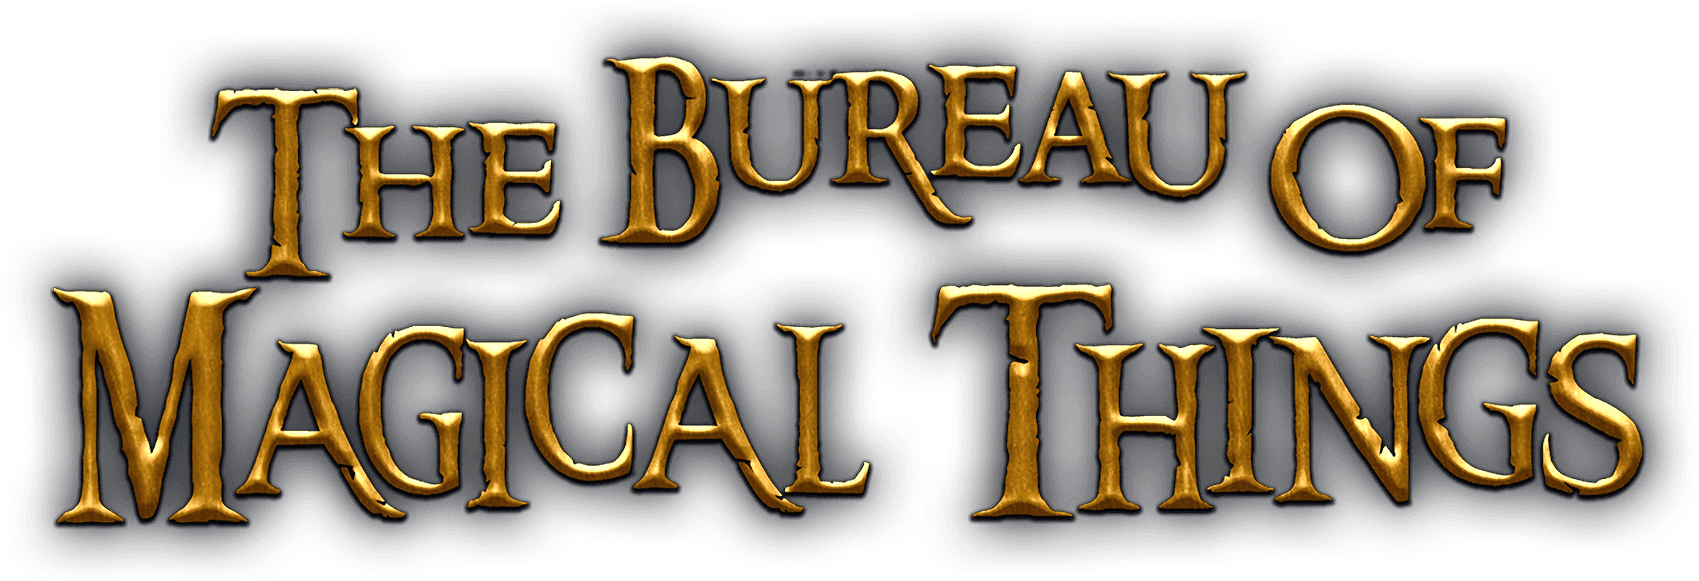 The Bureau of Magical Things logo